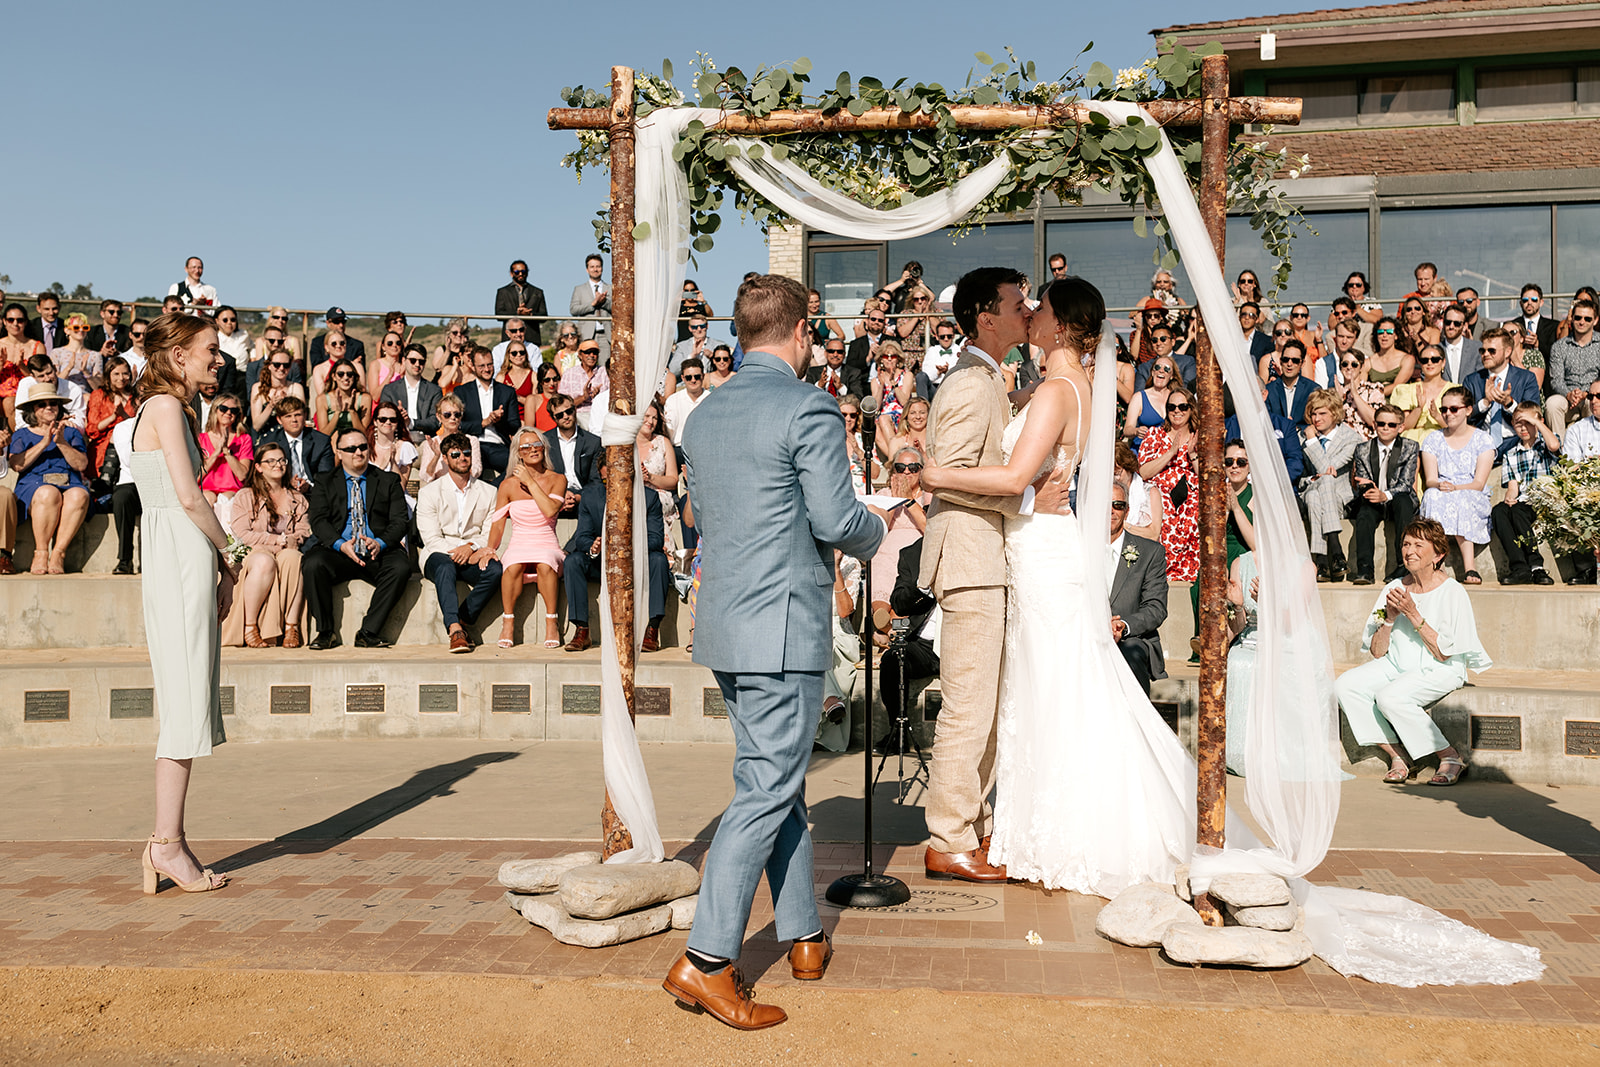 point vicente lighthouse wedding rancho palos verdes california outdoor ceremony golden hour wedding vows speech